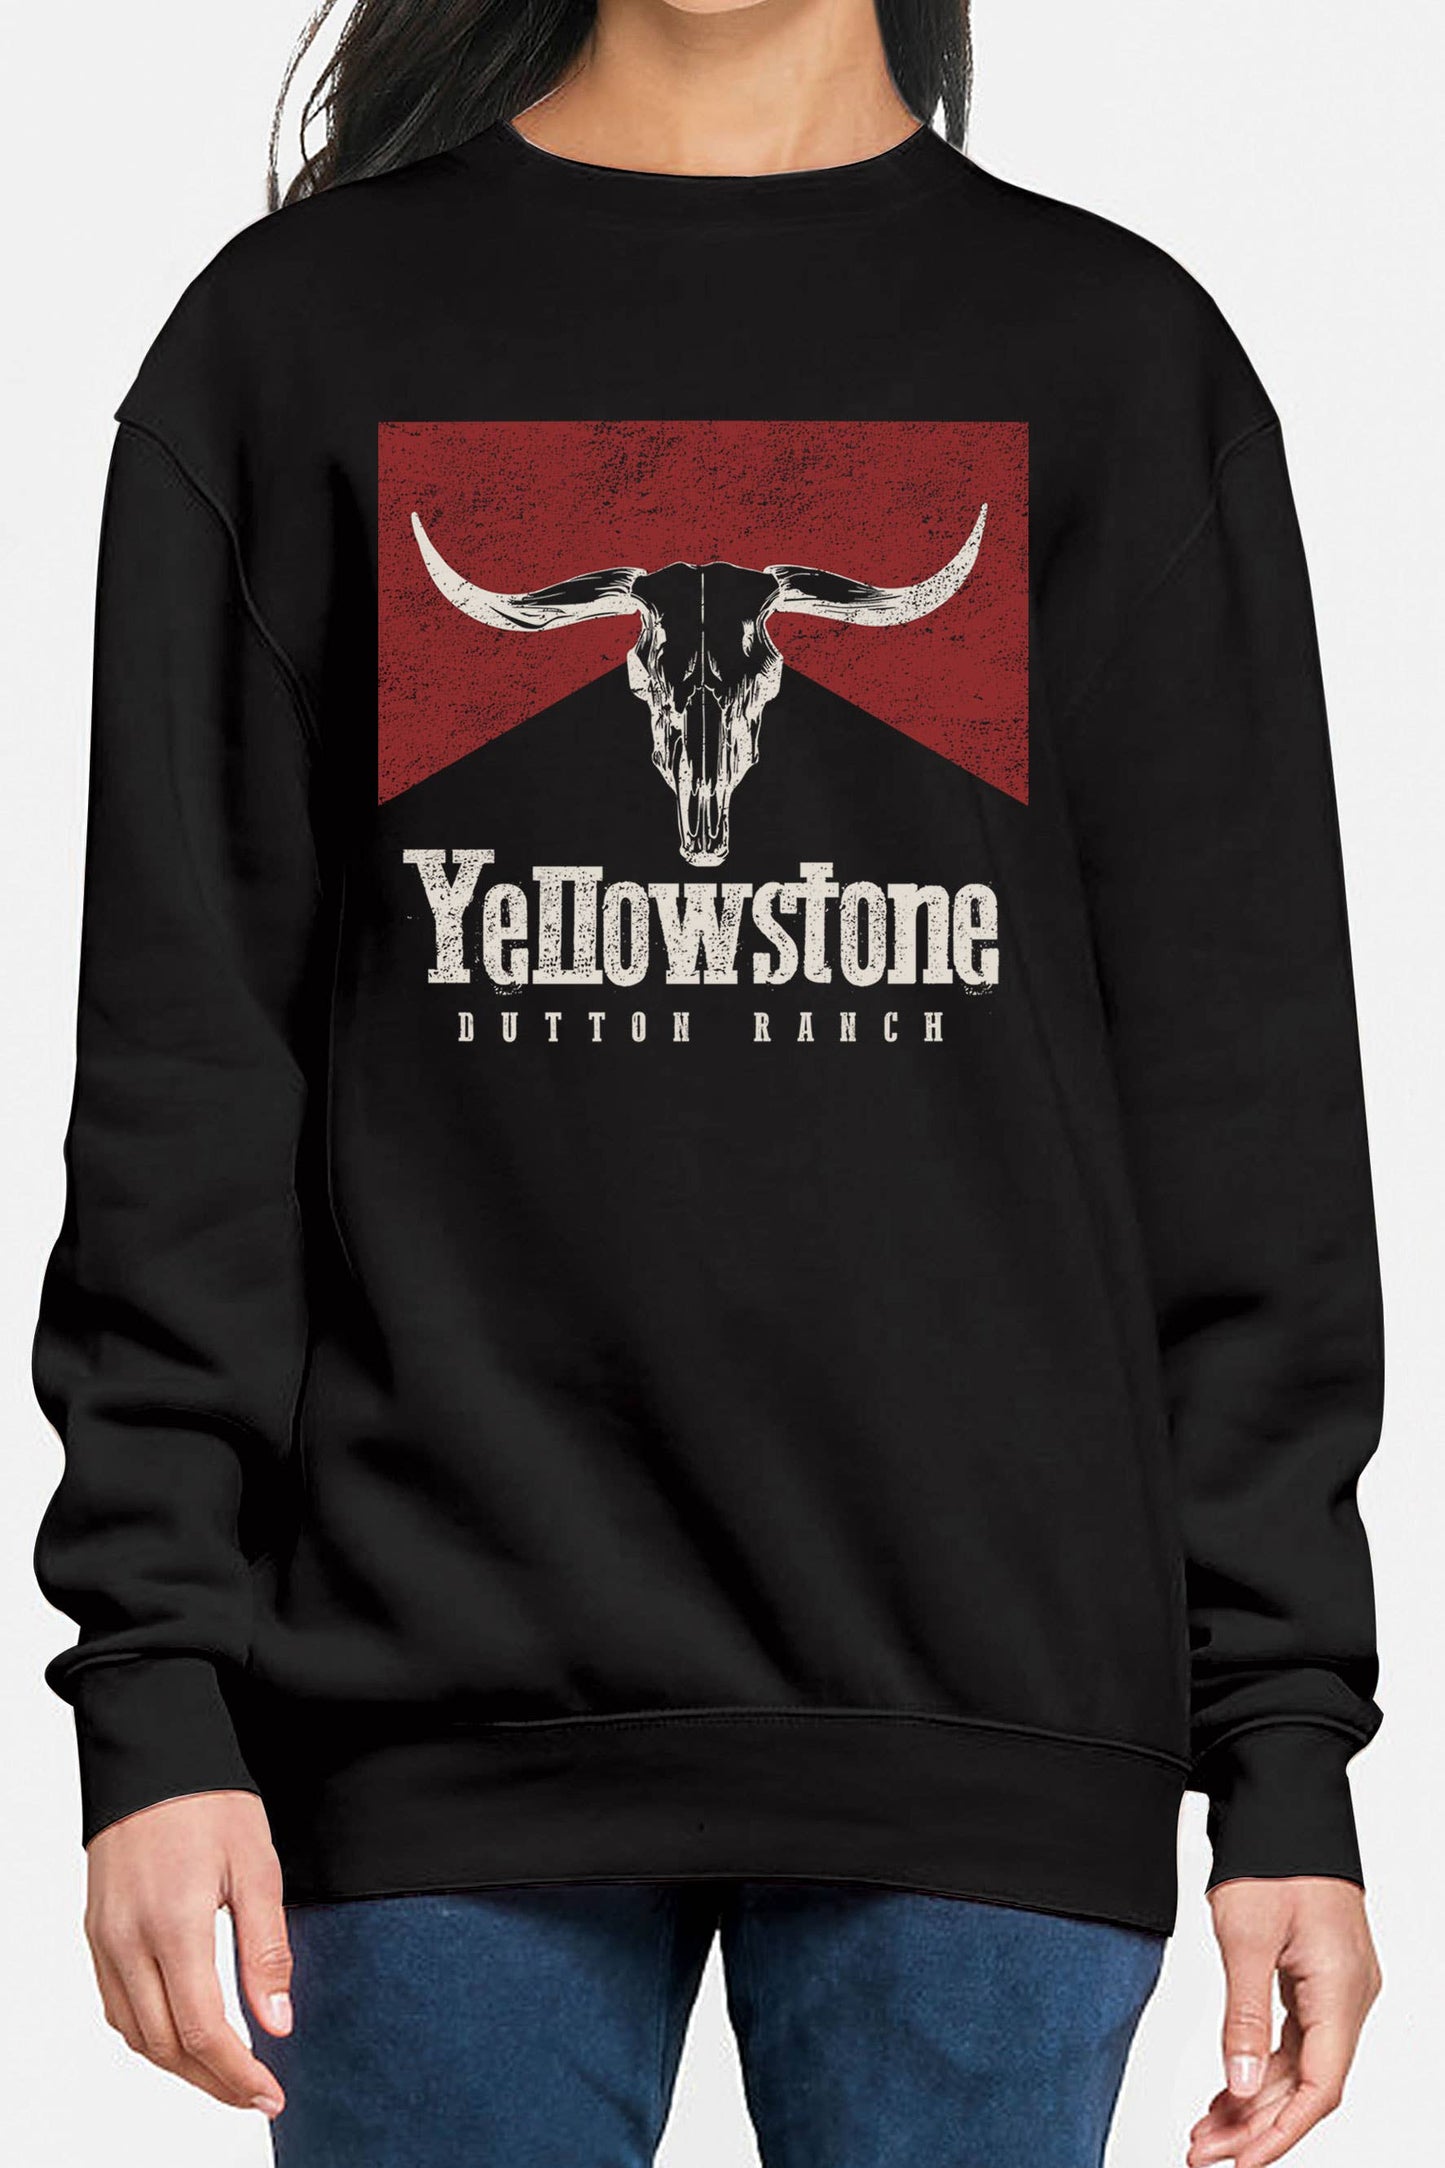 Yellowstone Unisex Black Graphic Sweater